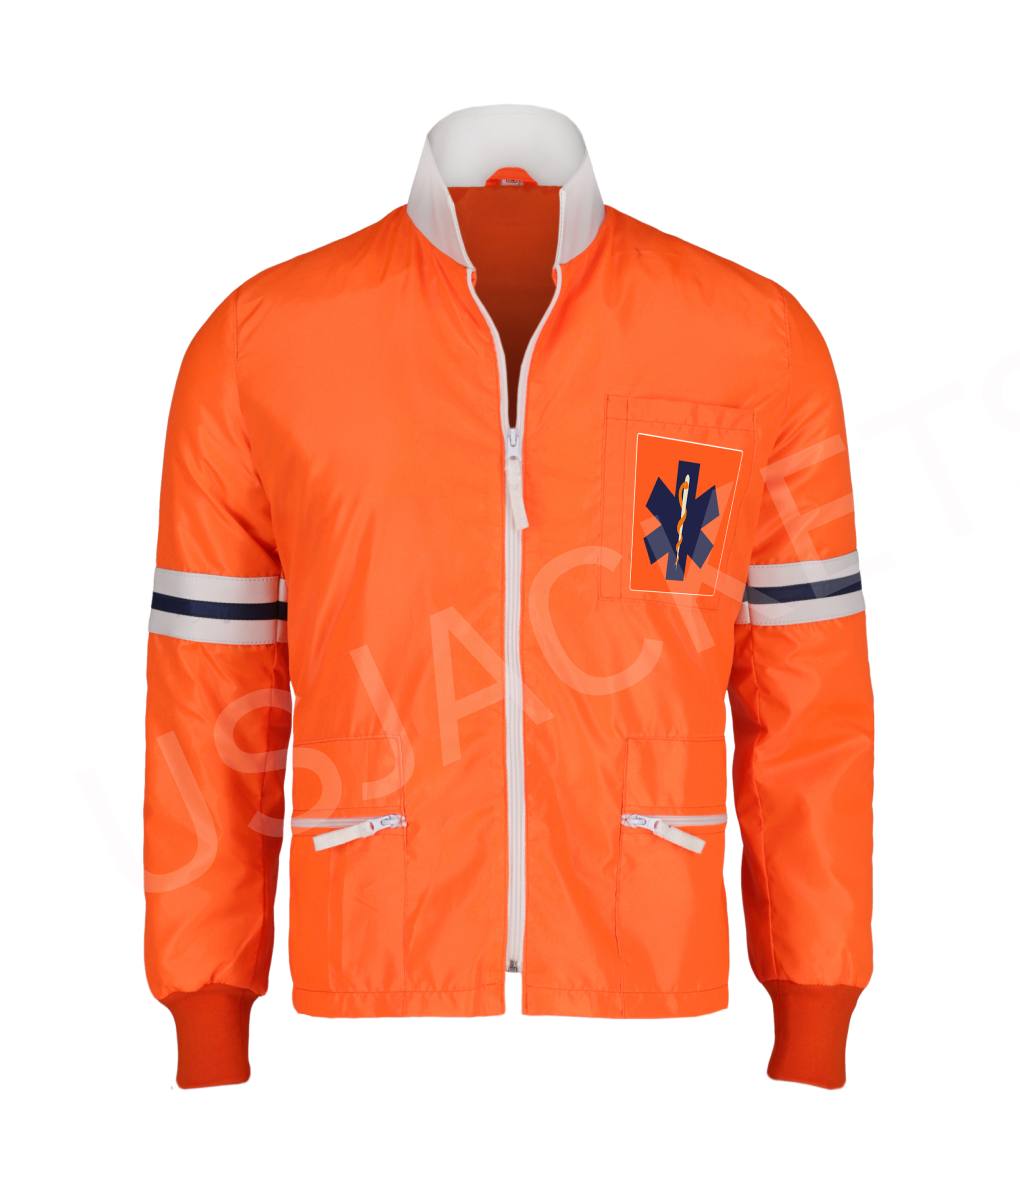 J. J. McClure Orange Jacket4